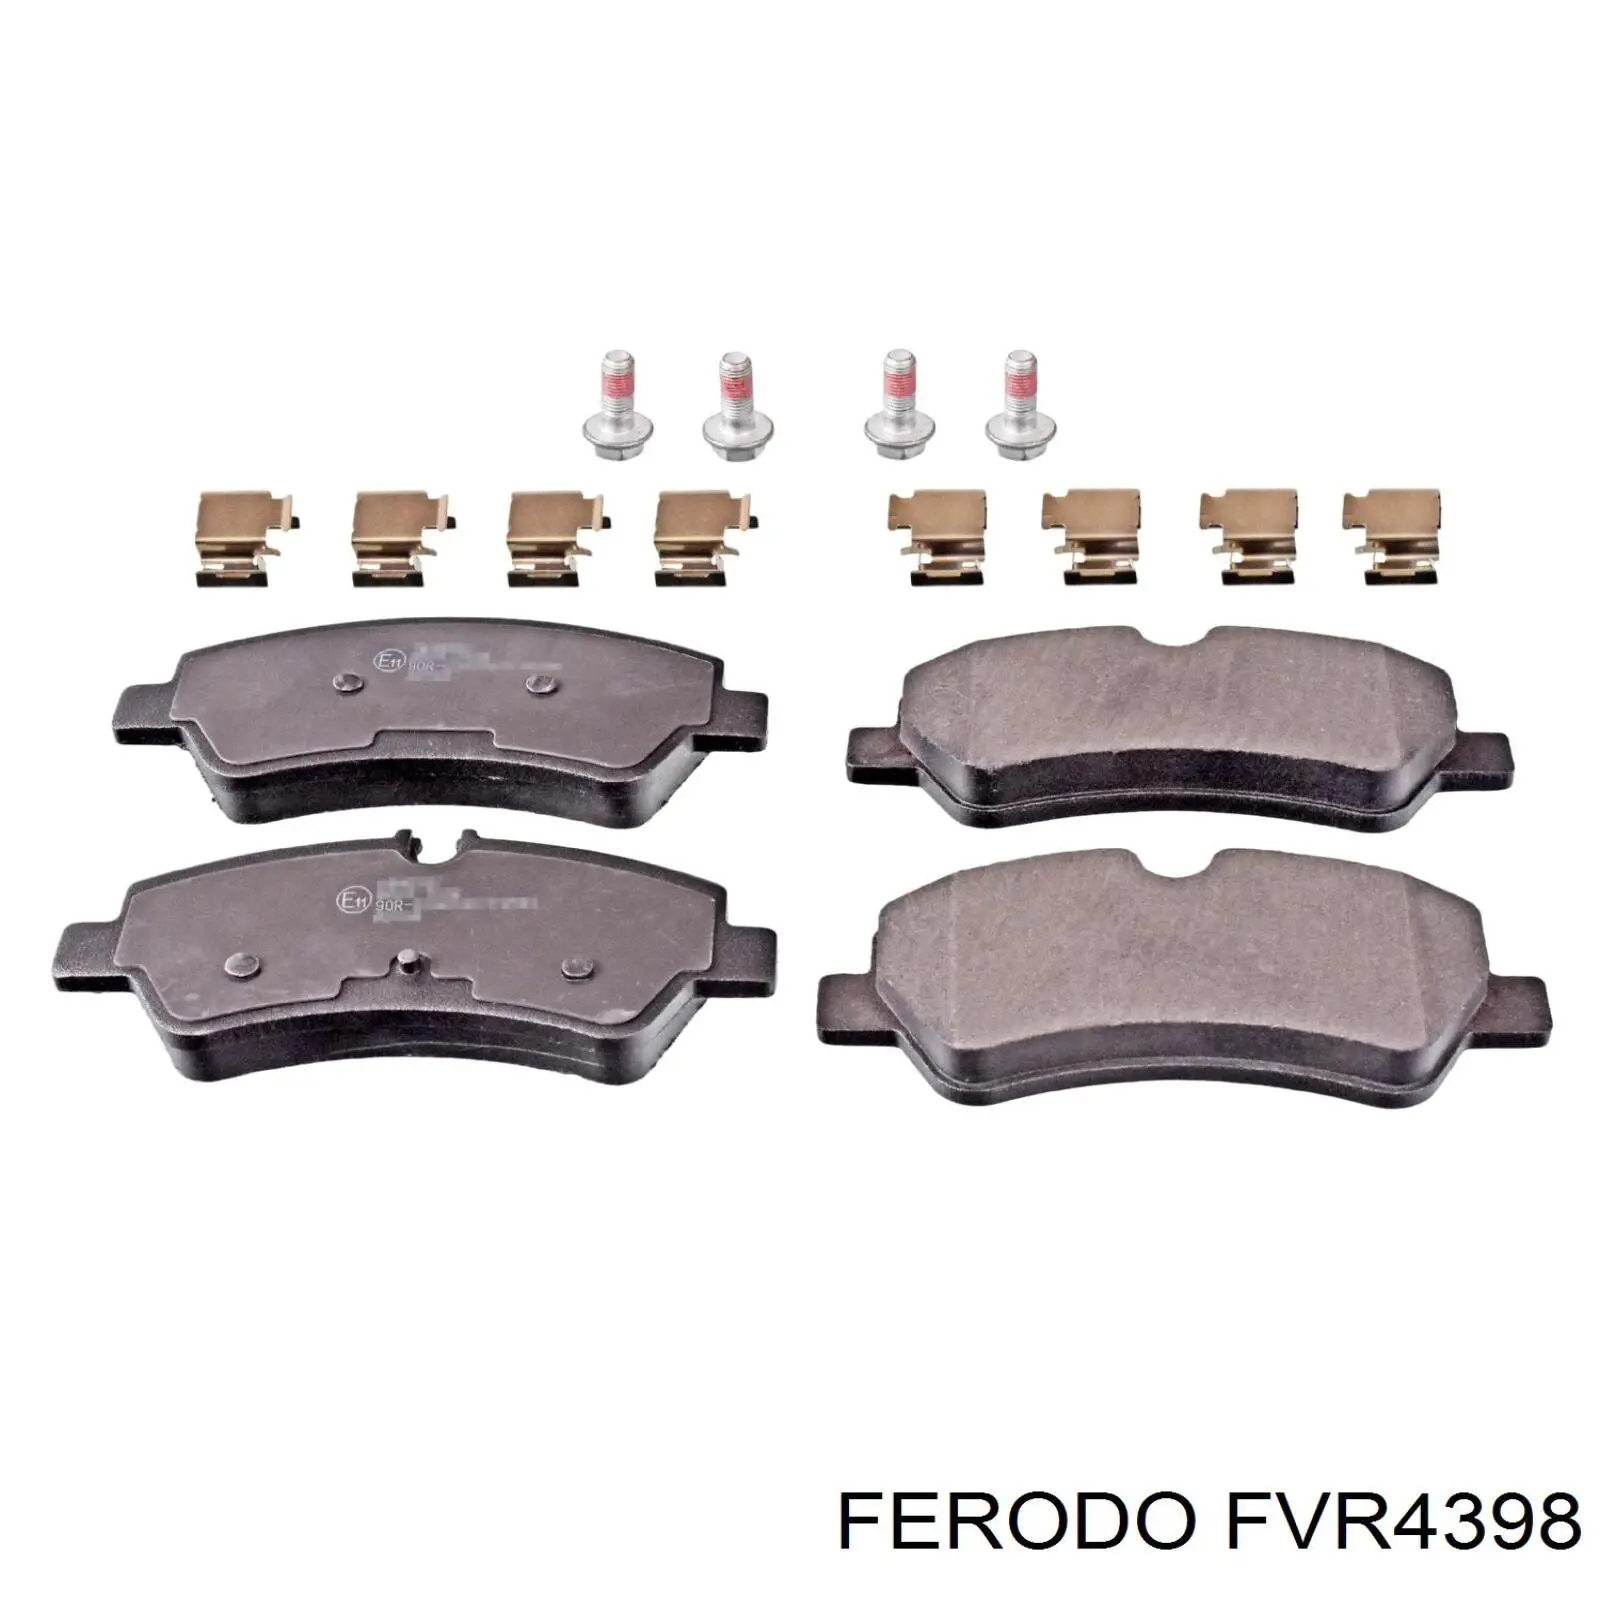 Pastillas de freno traseras FVR4398 Ferodo